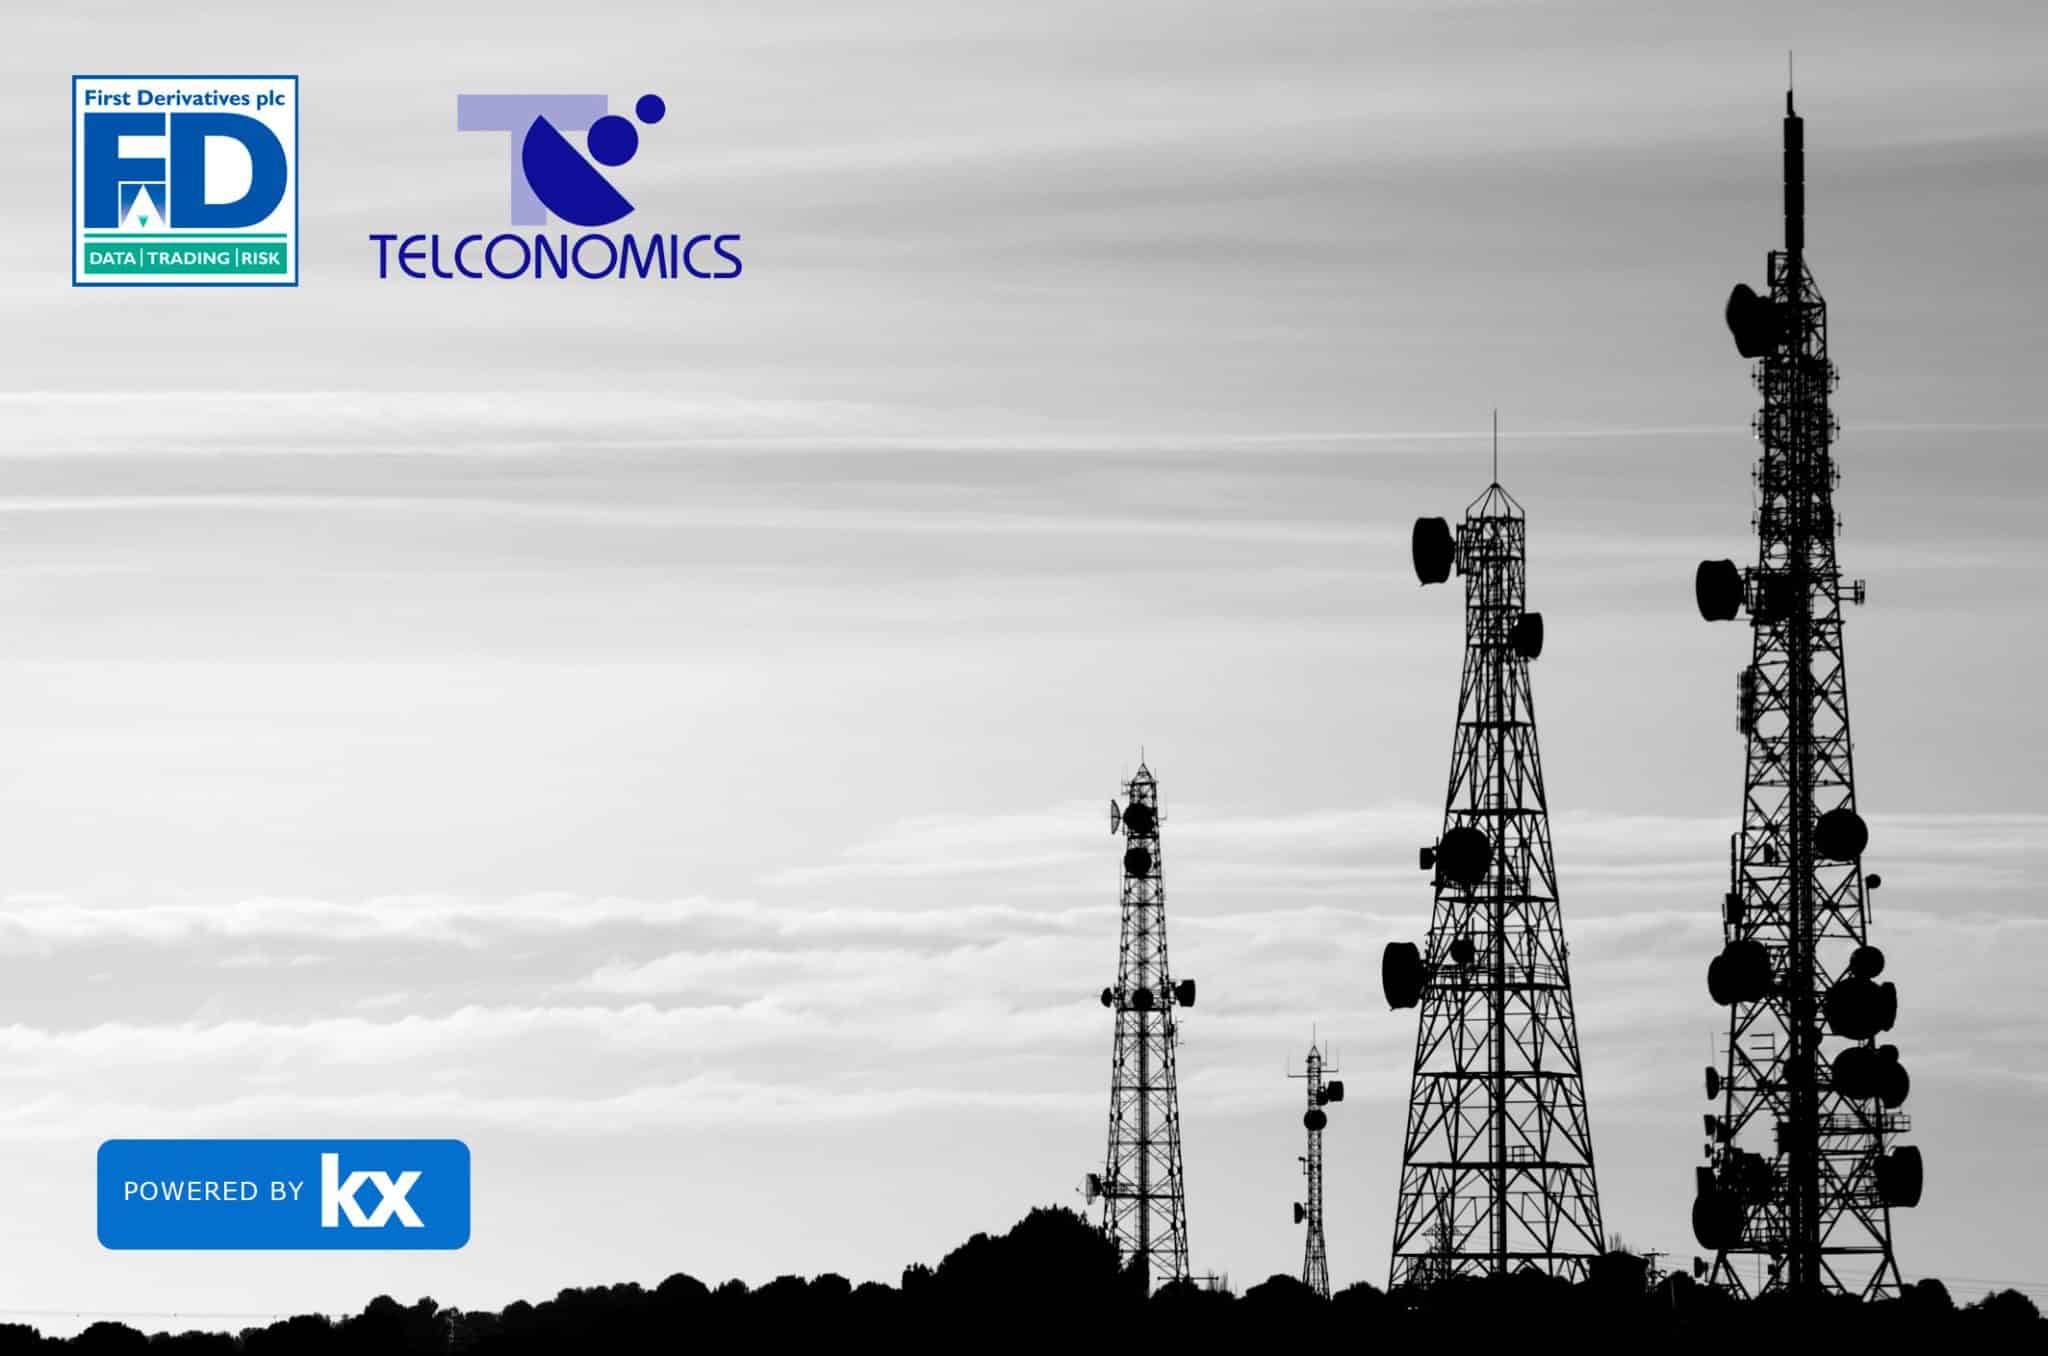 Telco Towers - KX